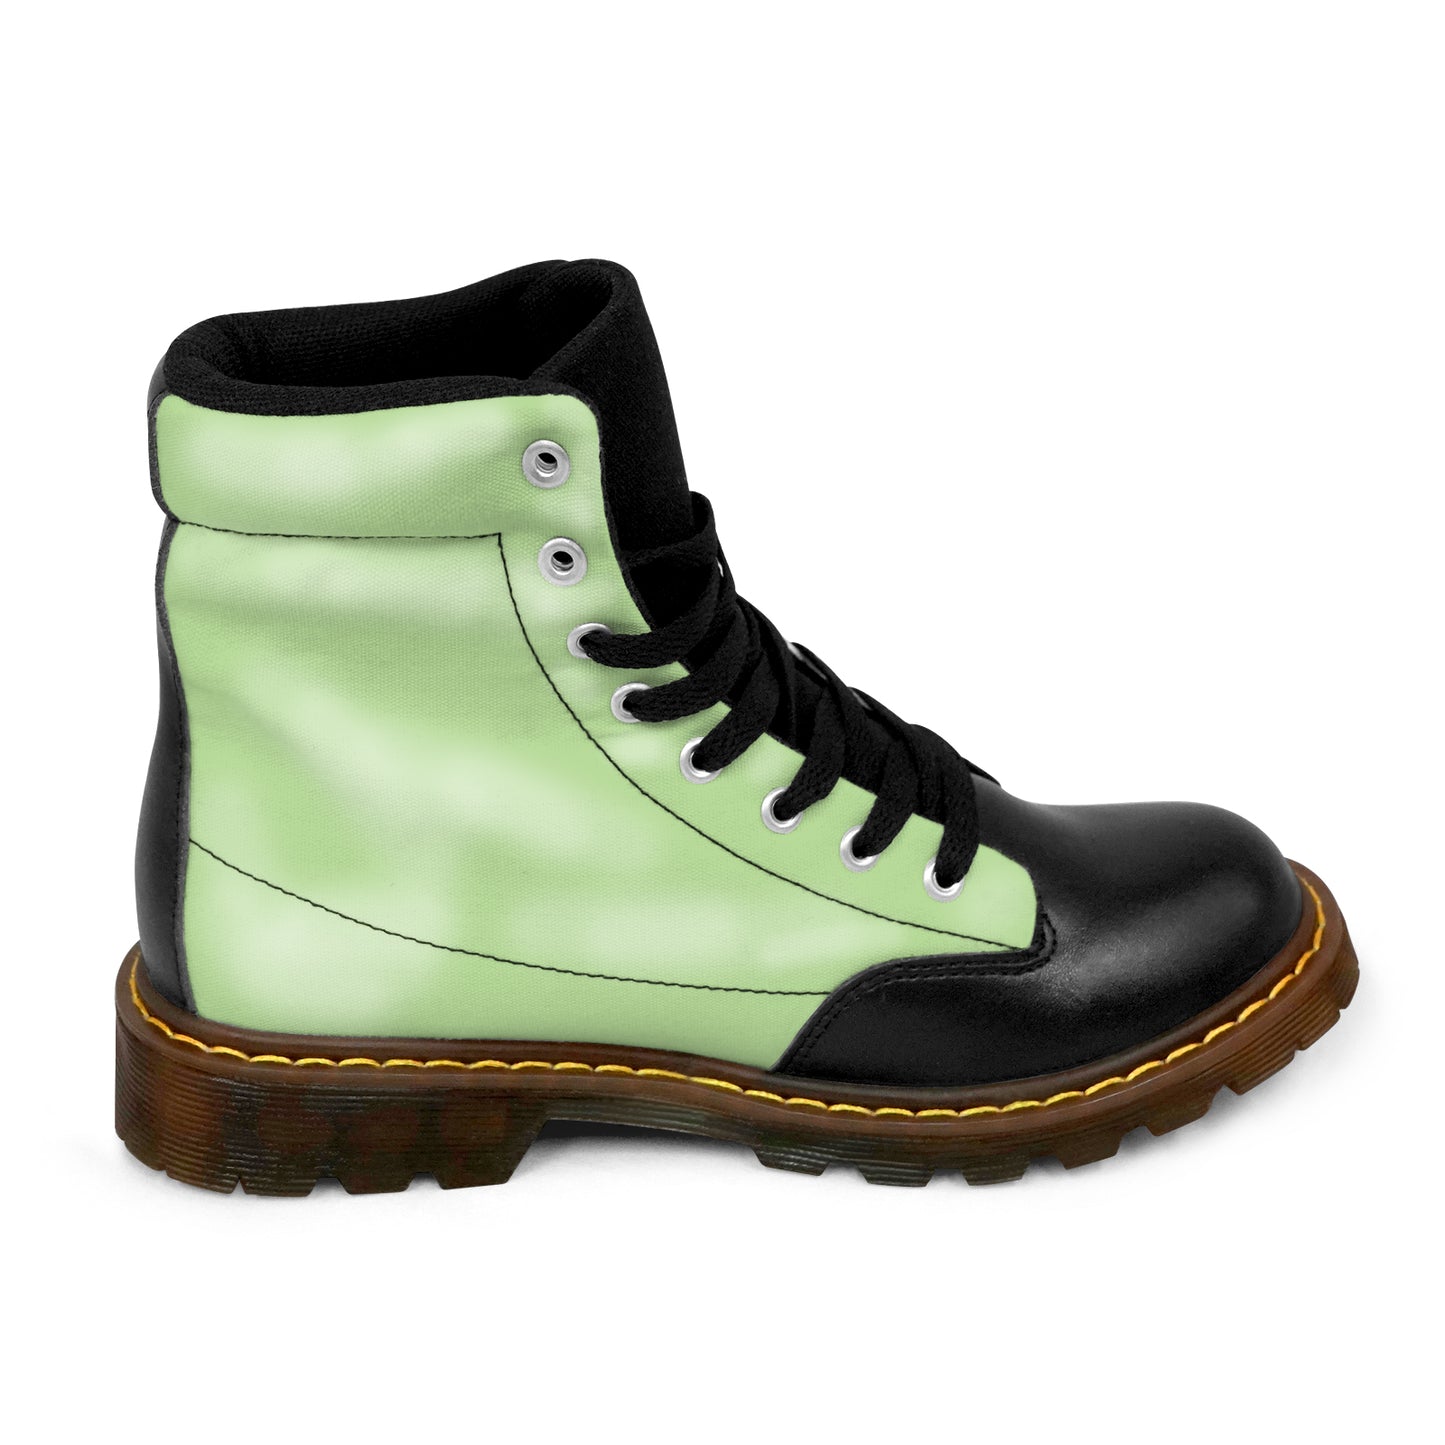 Winter Round Toe Women's Boots  - Mint Green